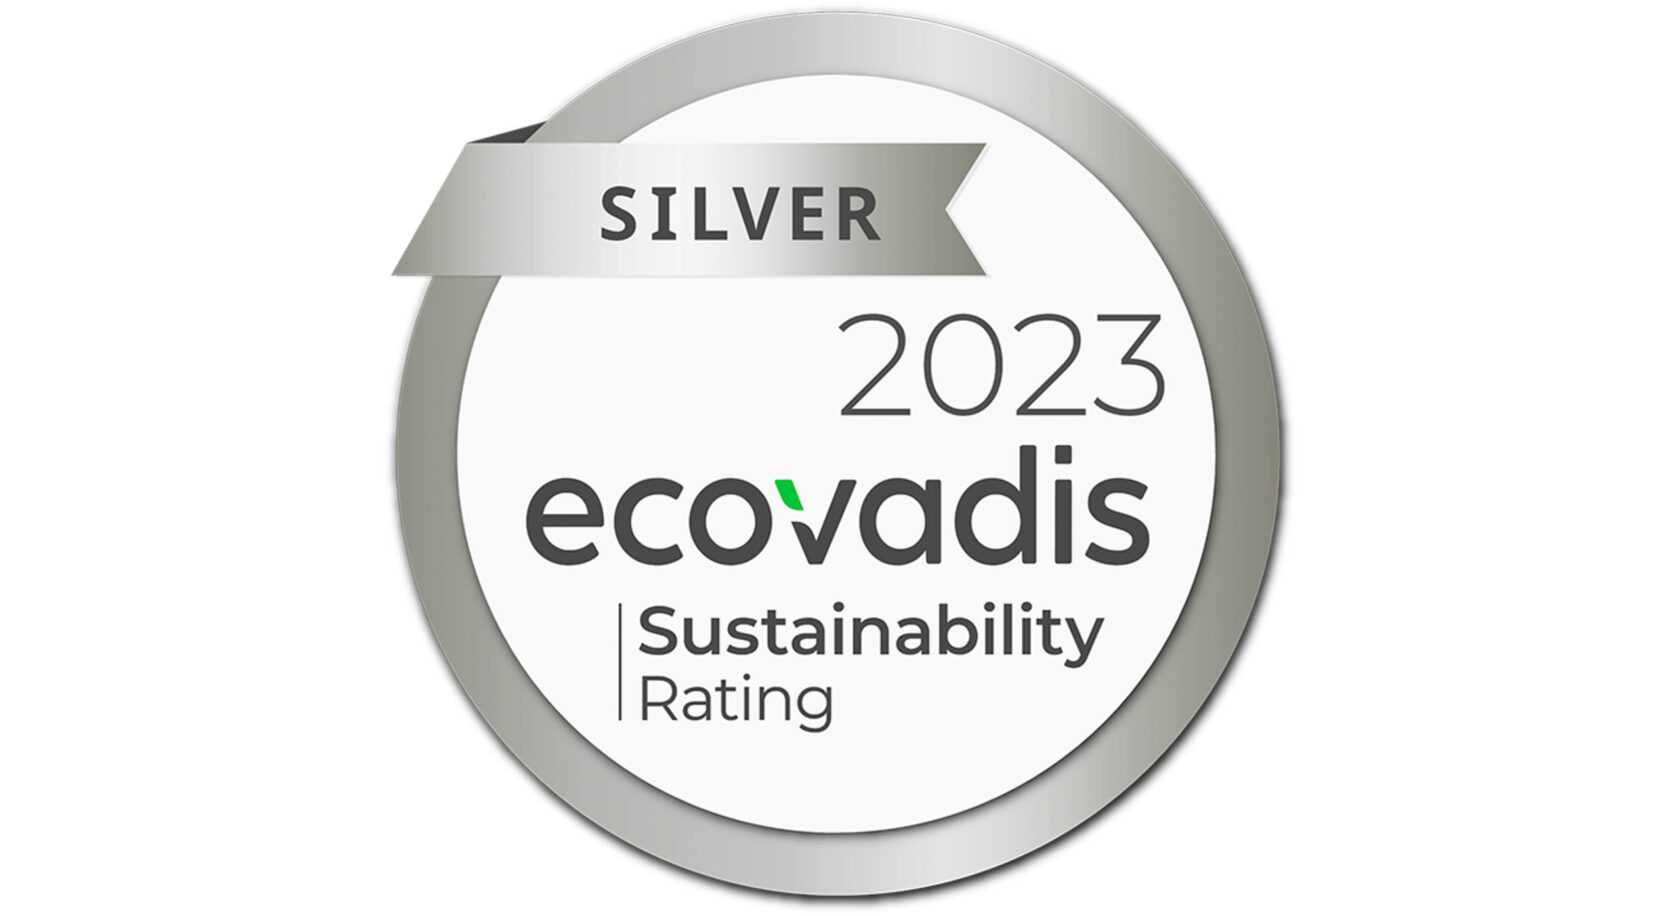 Ecovadis 2023 silver sustainability rating award logo.